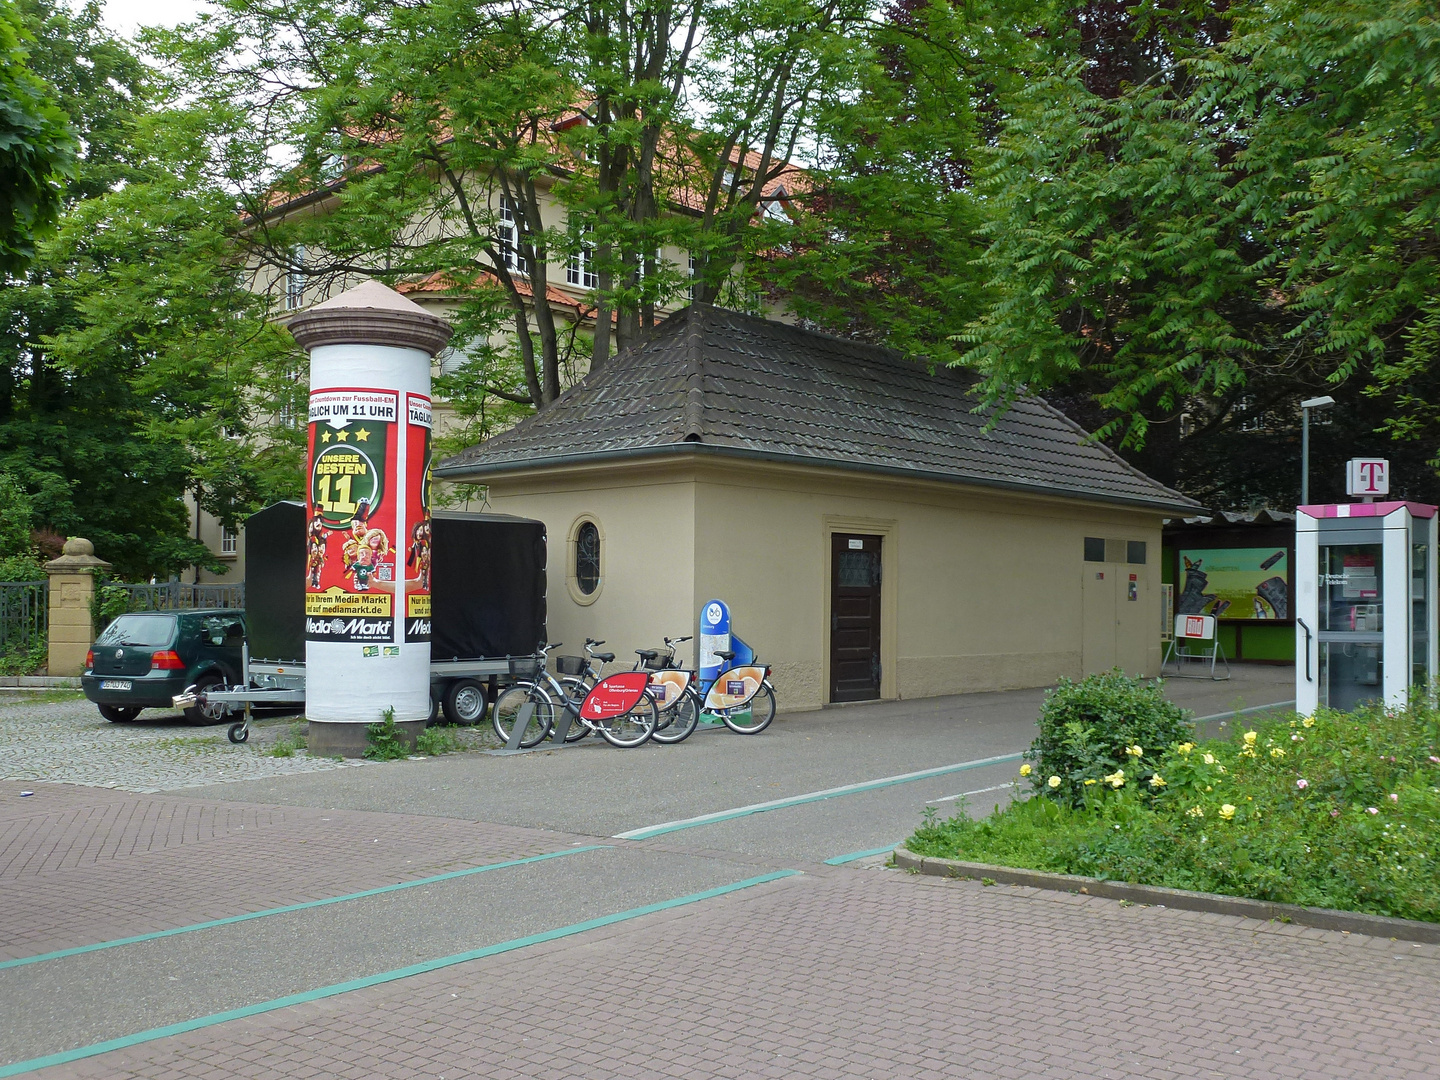 Trafostation - alte Kabelstation in Offenburg